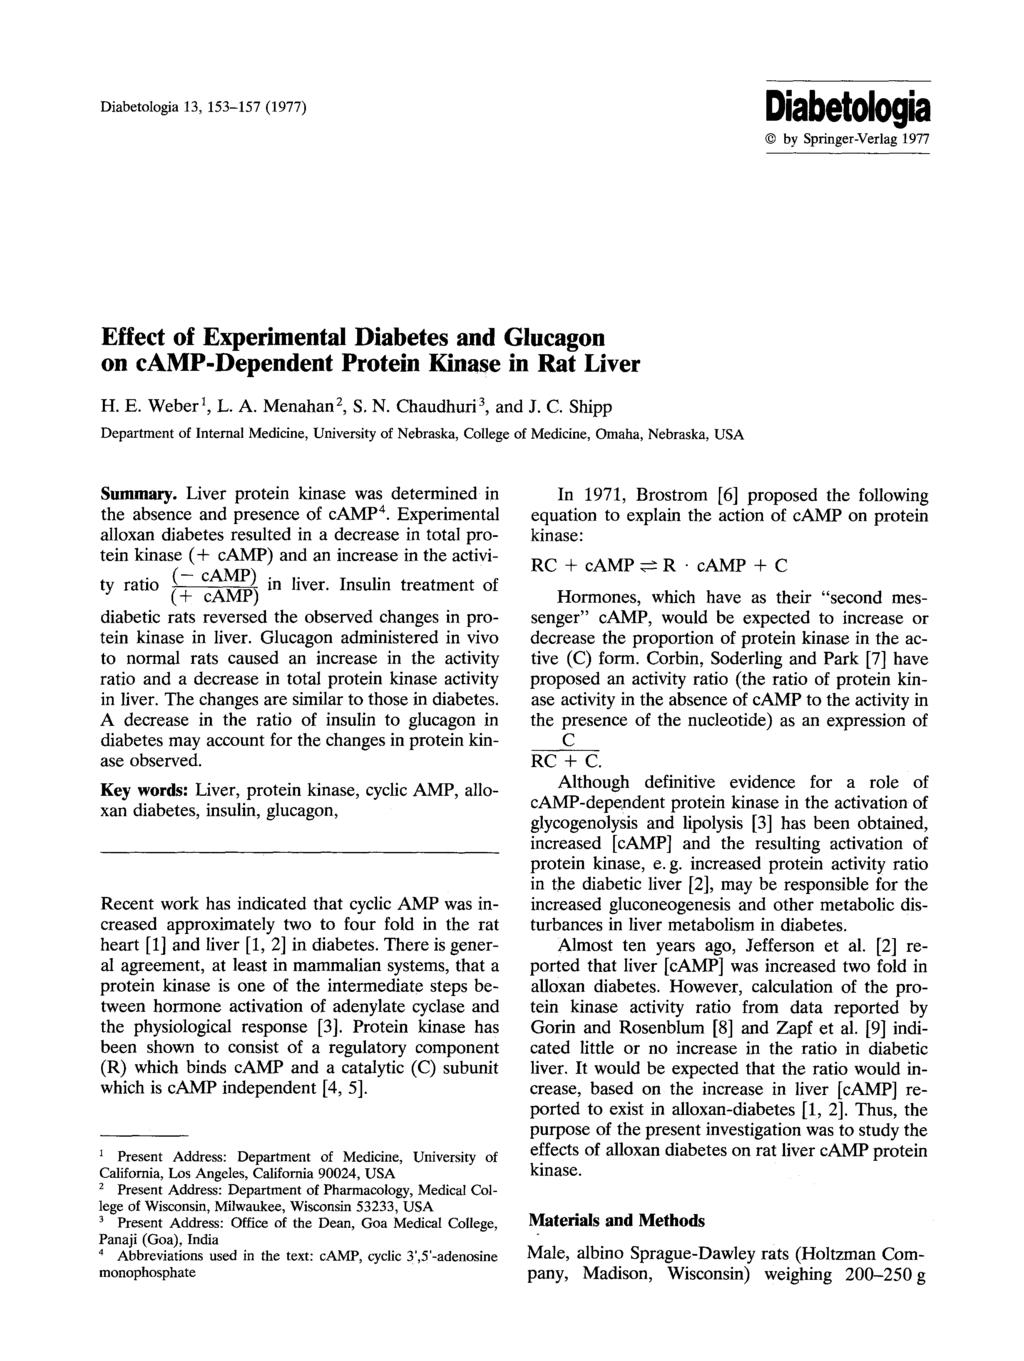 Diabetologia 13, 153-157 (1977) Diabetologia 9 by Springer-Verlag 1977 Effect of Experimental Diabetes and Glucagon on camp-dependent Protein Kinase in Rat Liver H. E. Weber 1, L. A. Menahan 2, S. N.